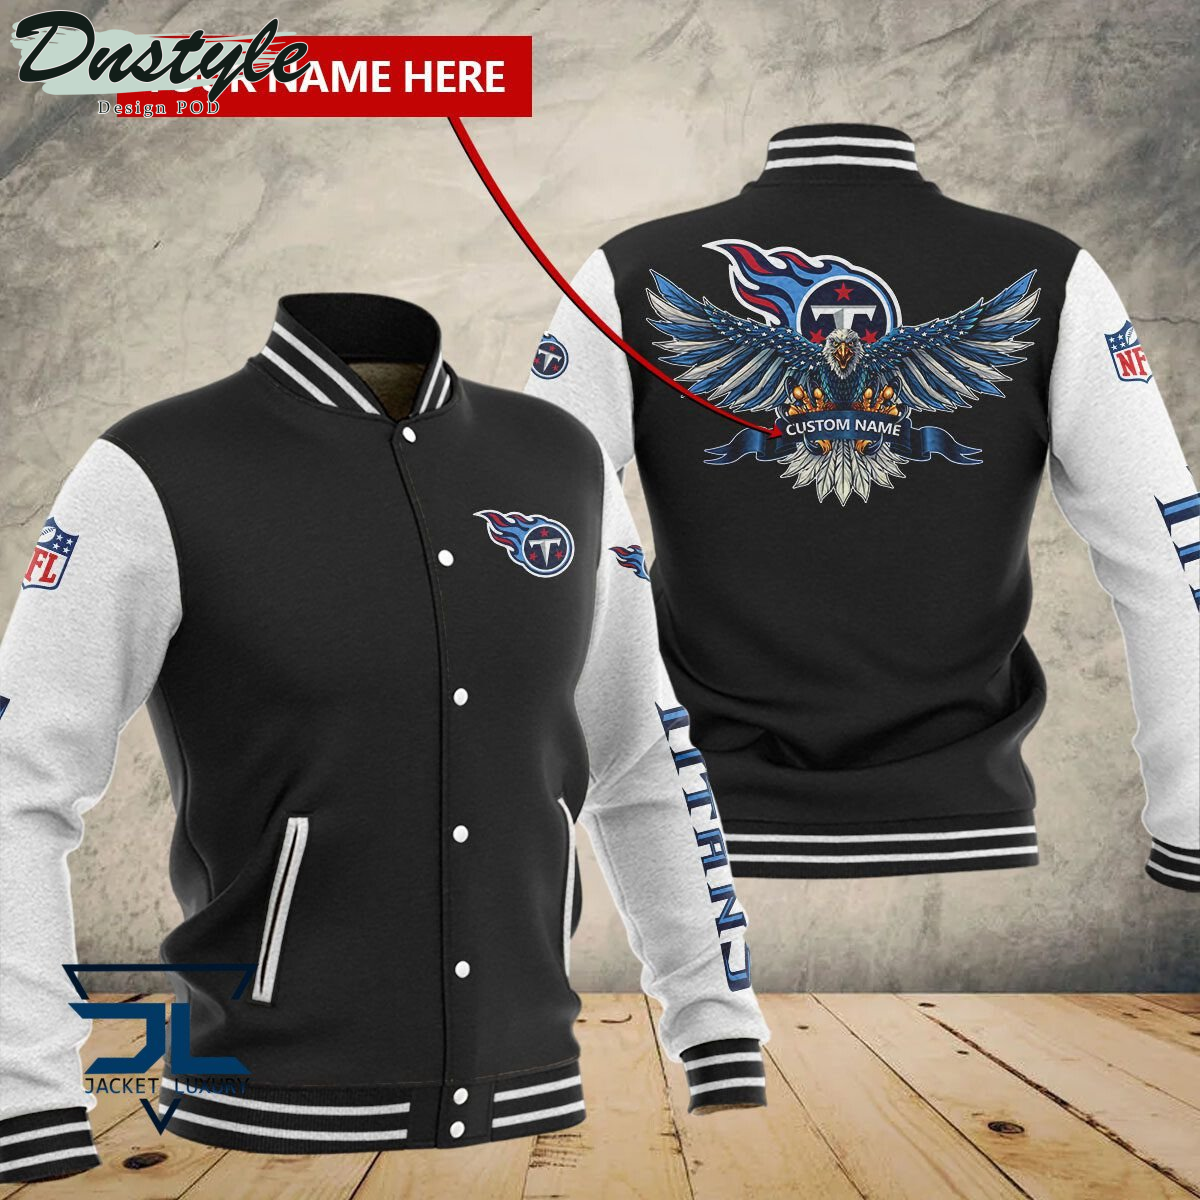 Tennessee Titans Eagles Custom Name Baseball Jacket